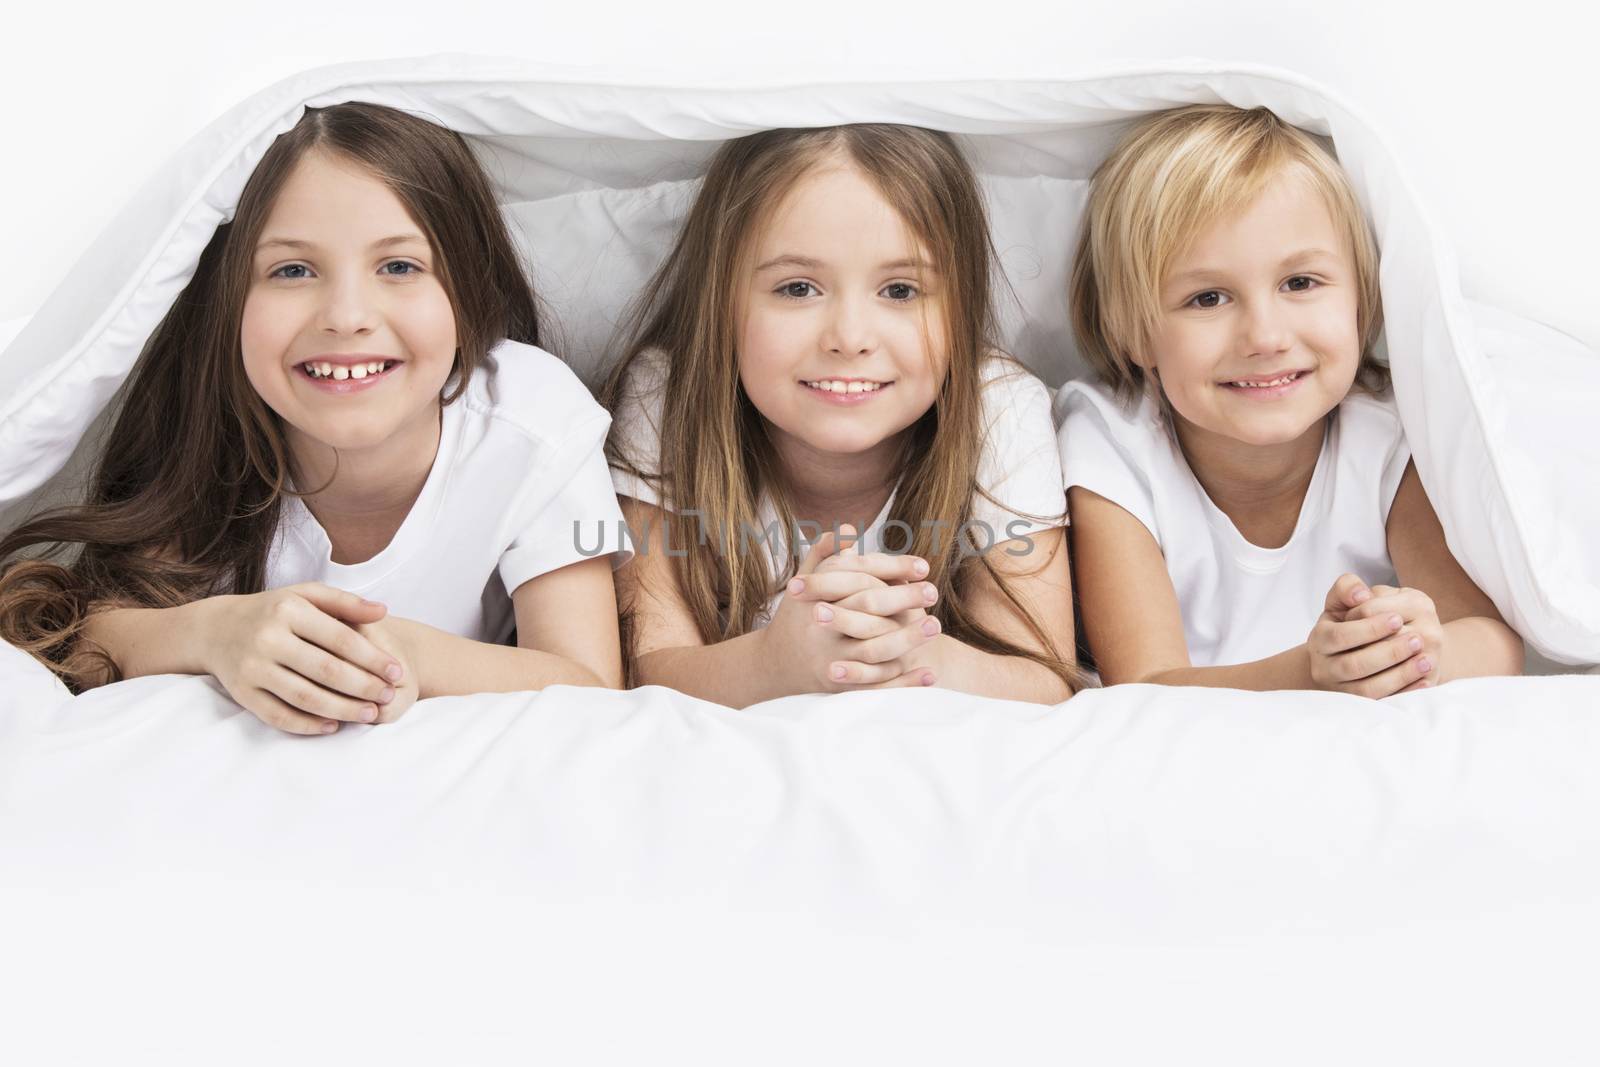 Three happy smiling children under one blanket in bed